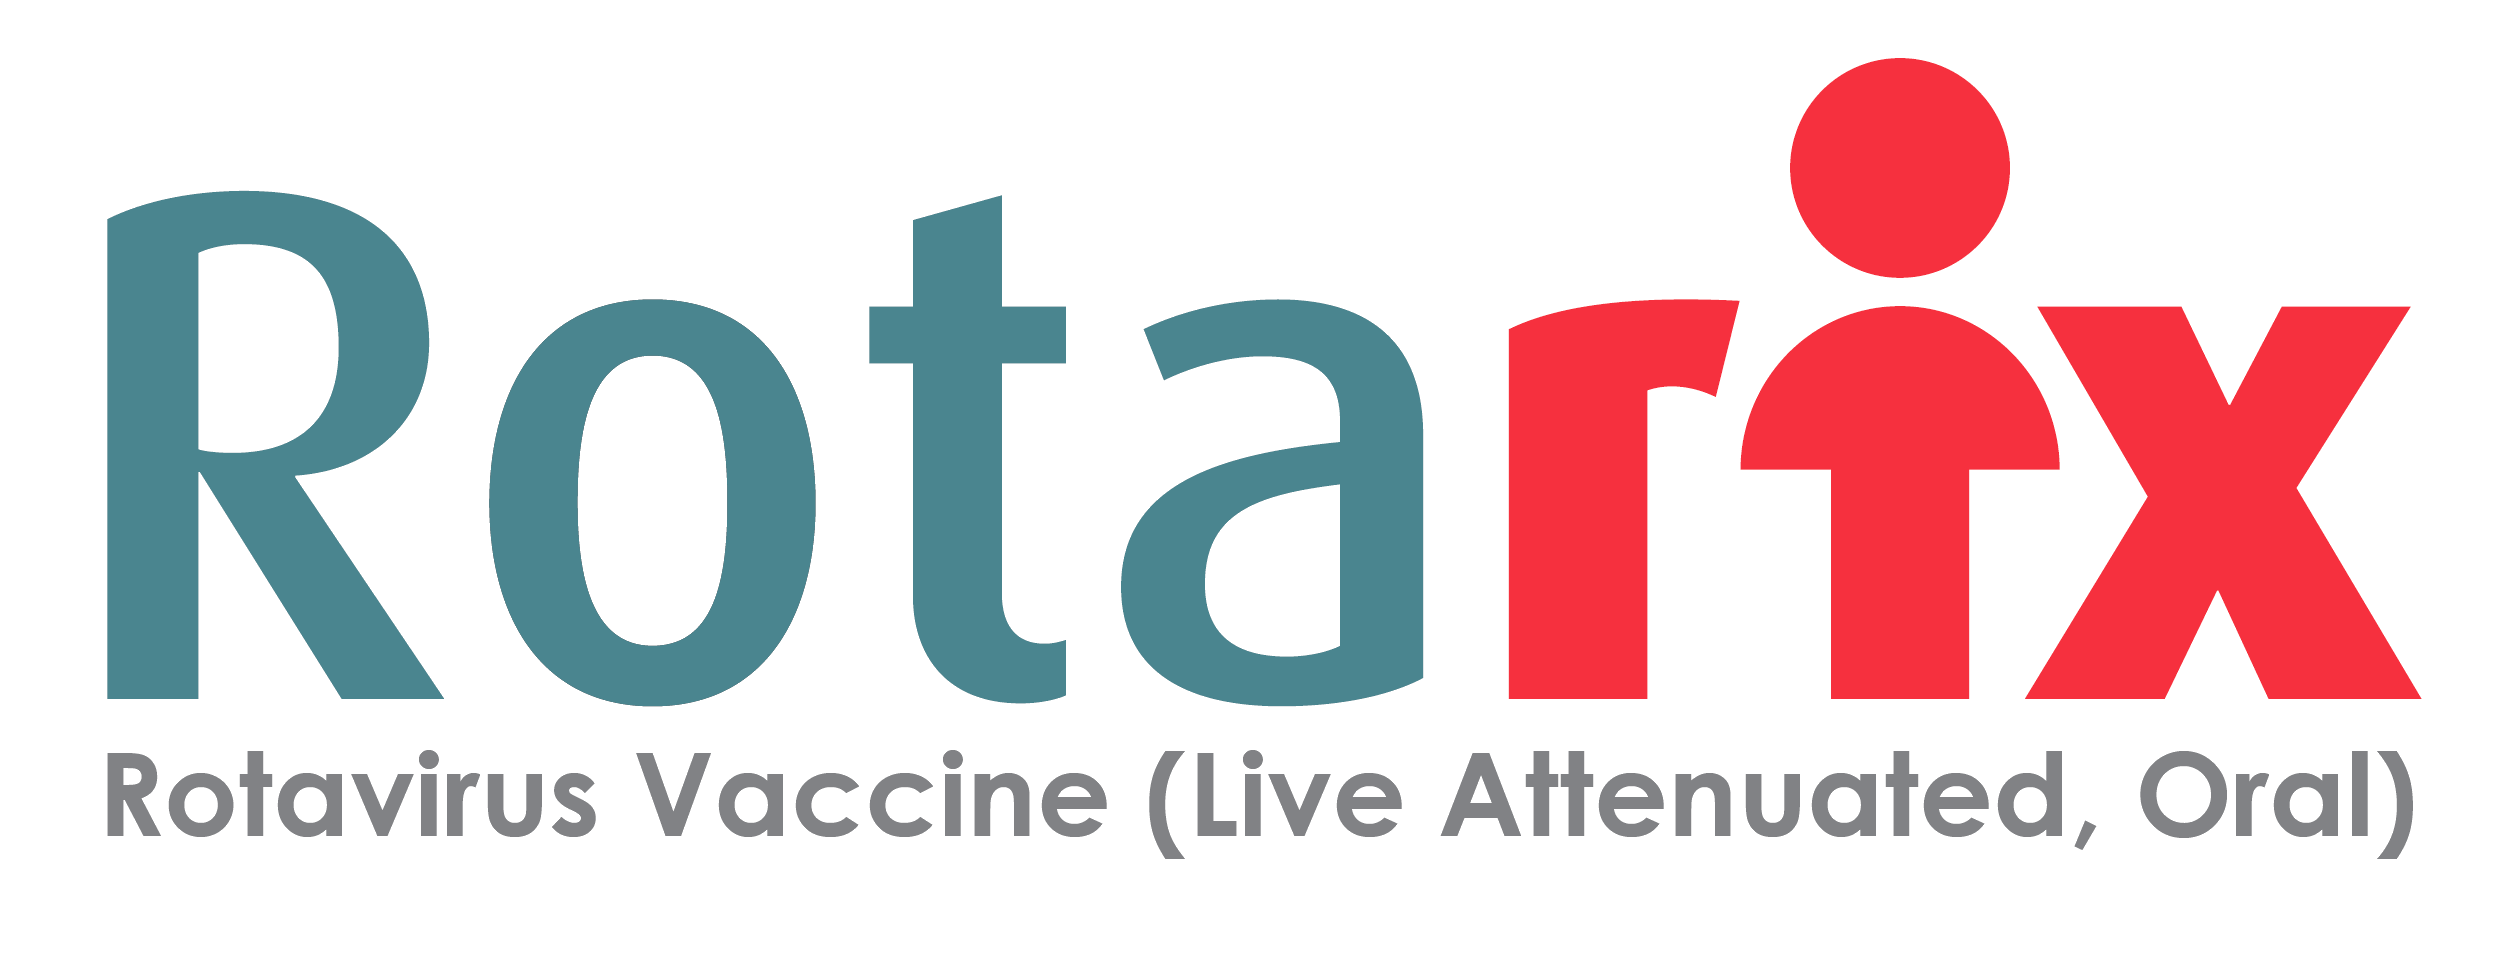 Rotarix logo